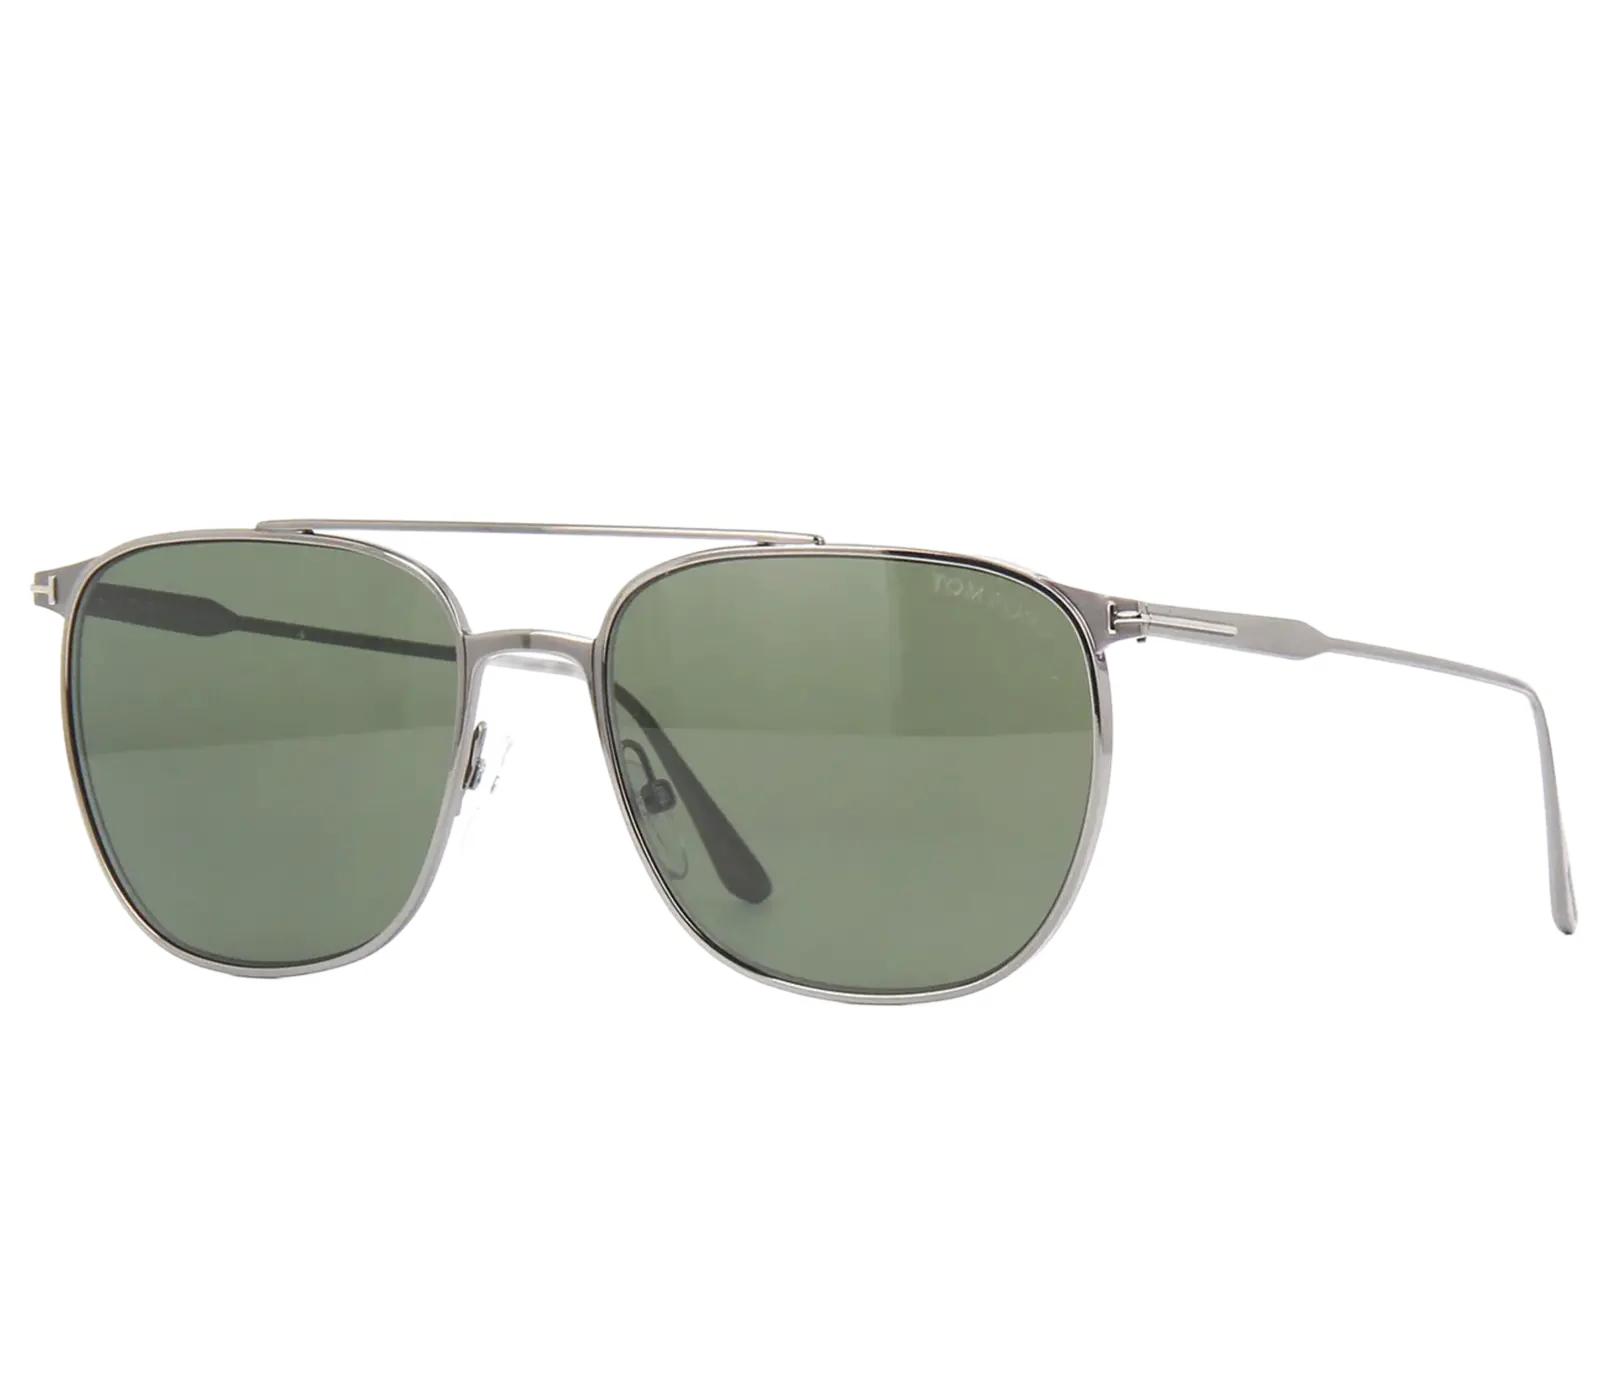 Tom Ford Sunglasses Tom Ford Sunglasses FT0692 12N 58mm Kip Eyeglasses Eyewear UK USA Australia 